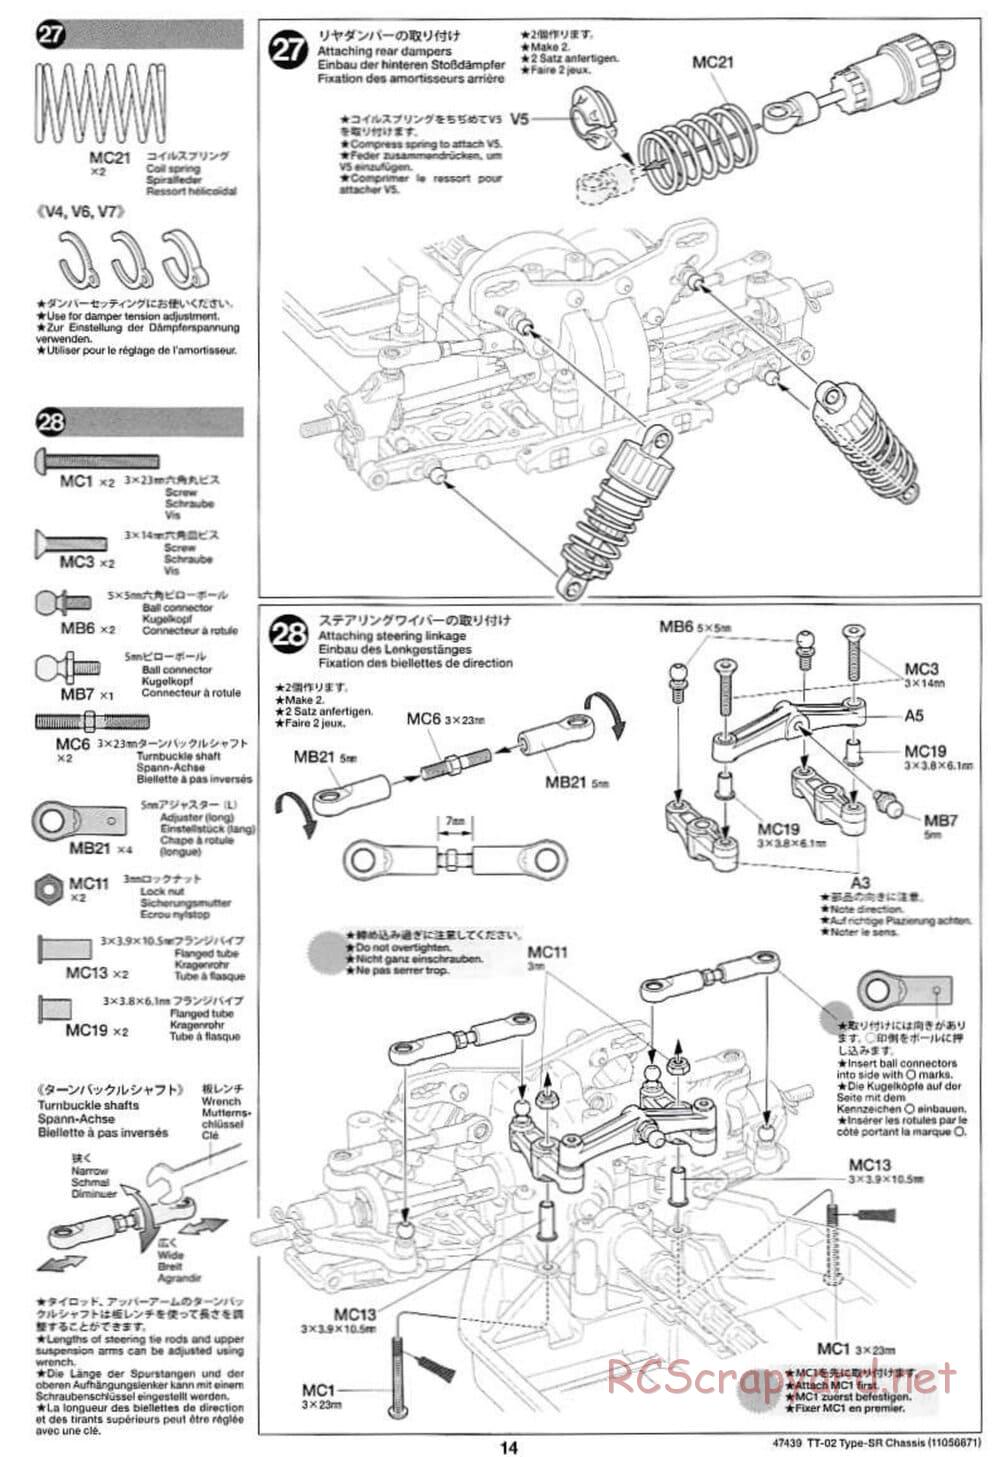 Tamiya - TT-02 Type-SR Chassis - Manual - Page 14